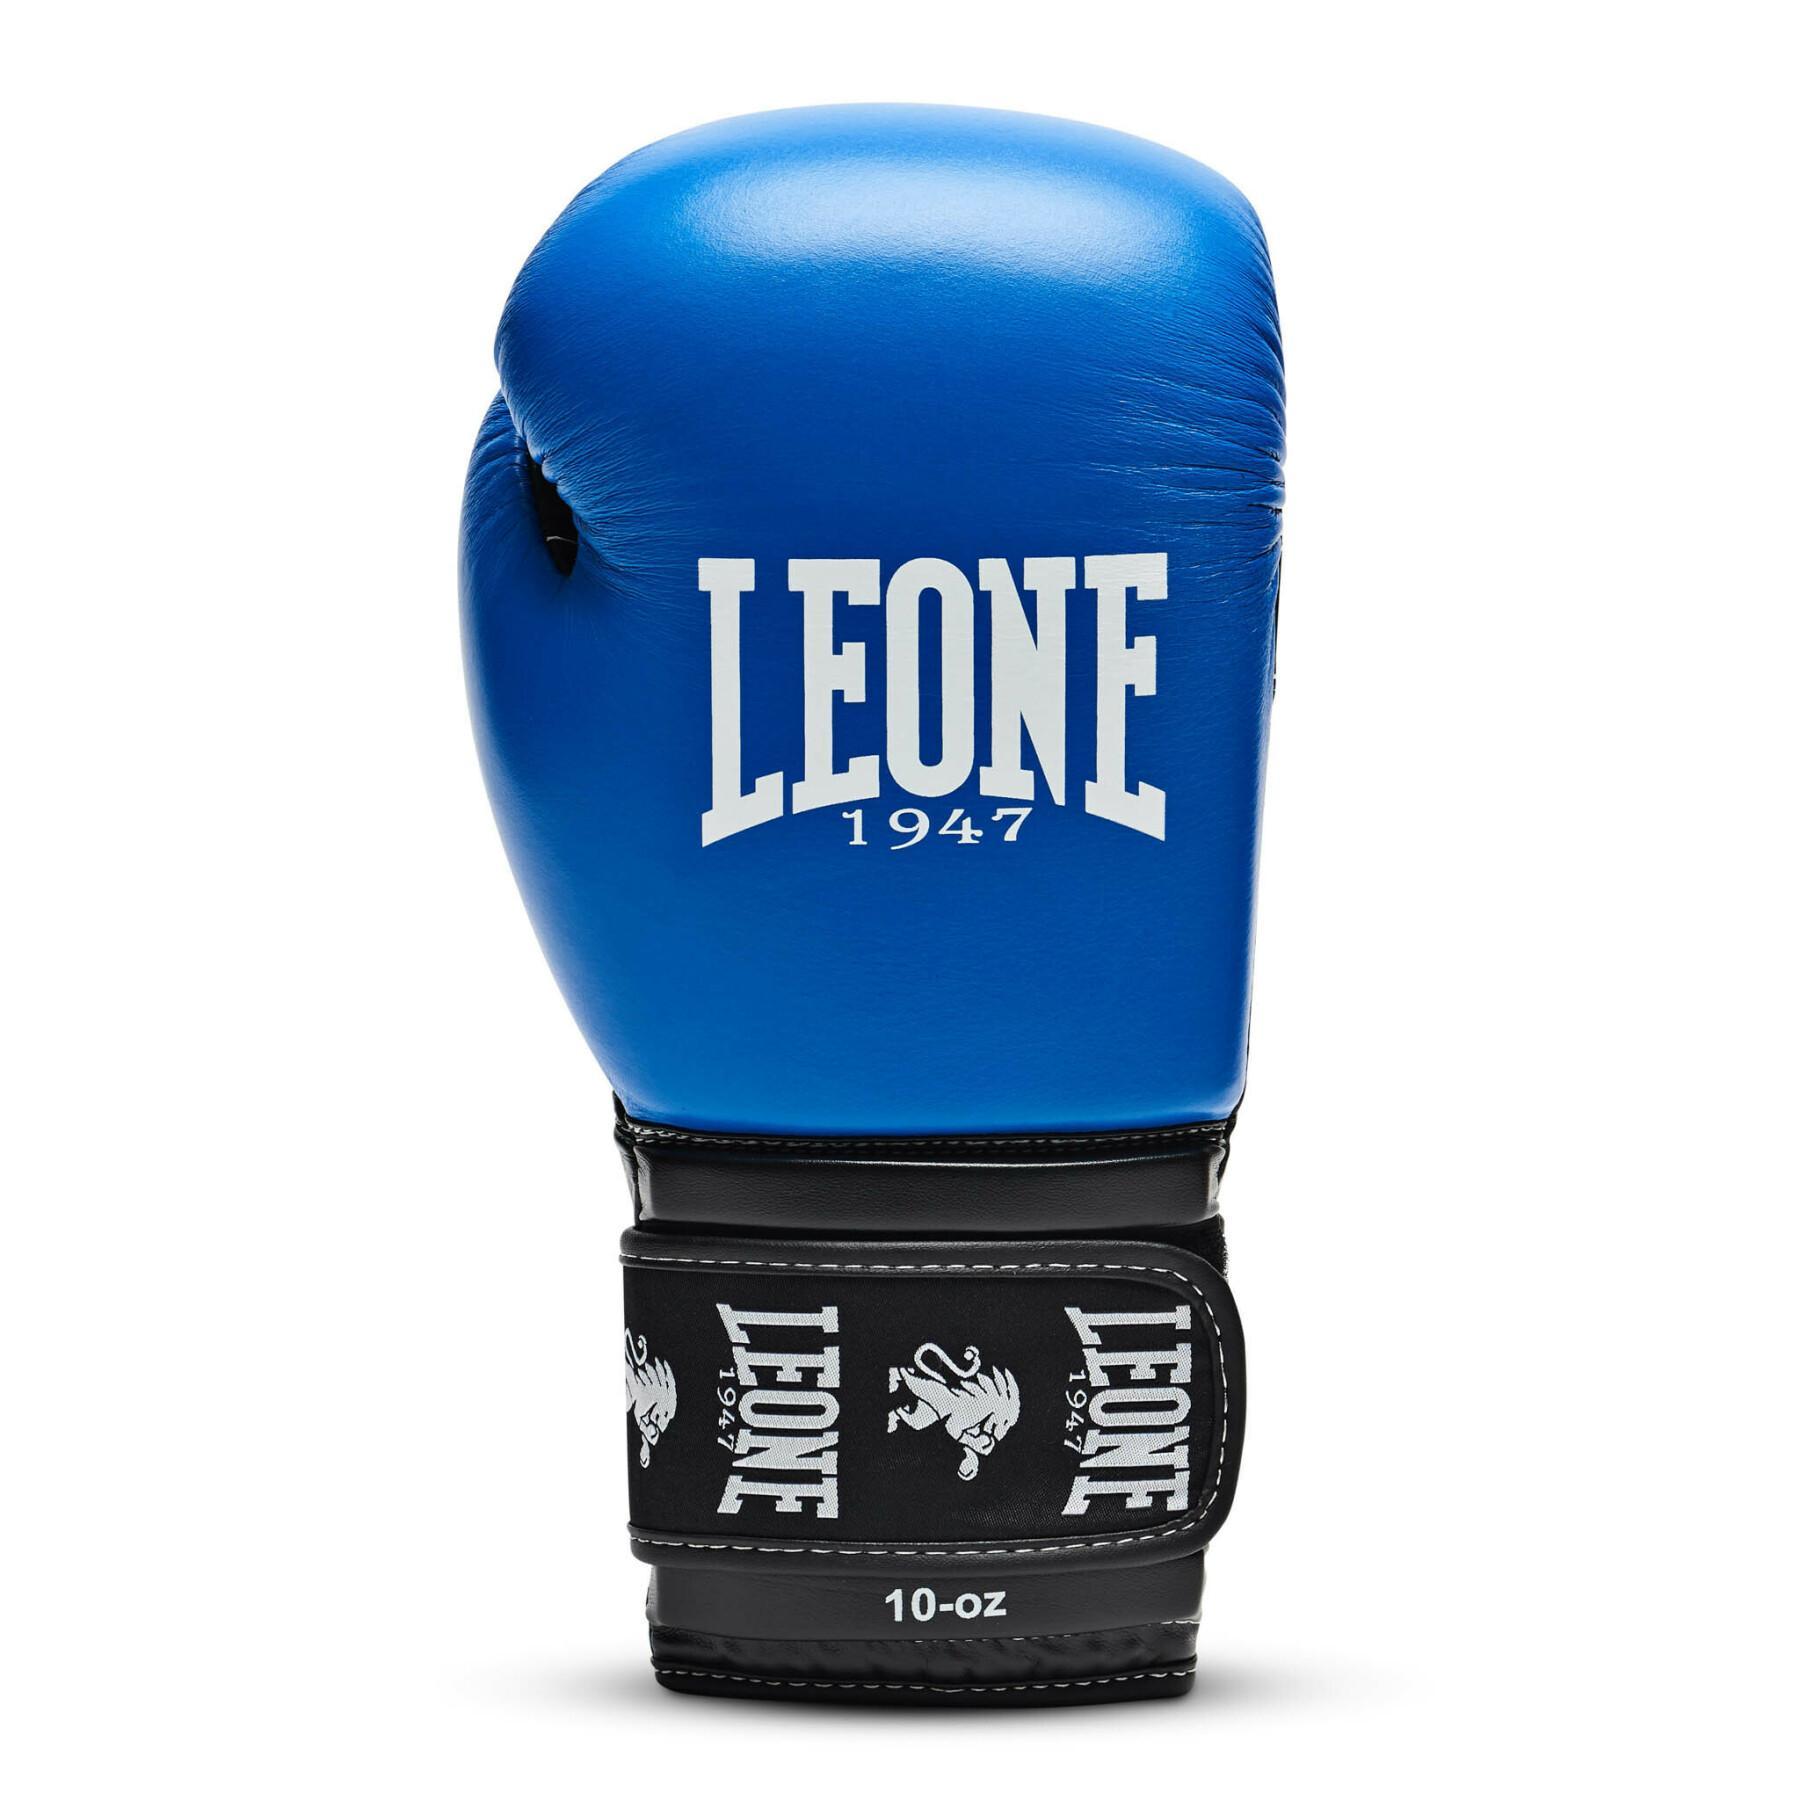 Boxhandschuhe Leone ambassador 10 oz